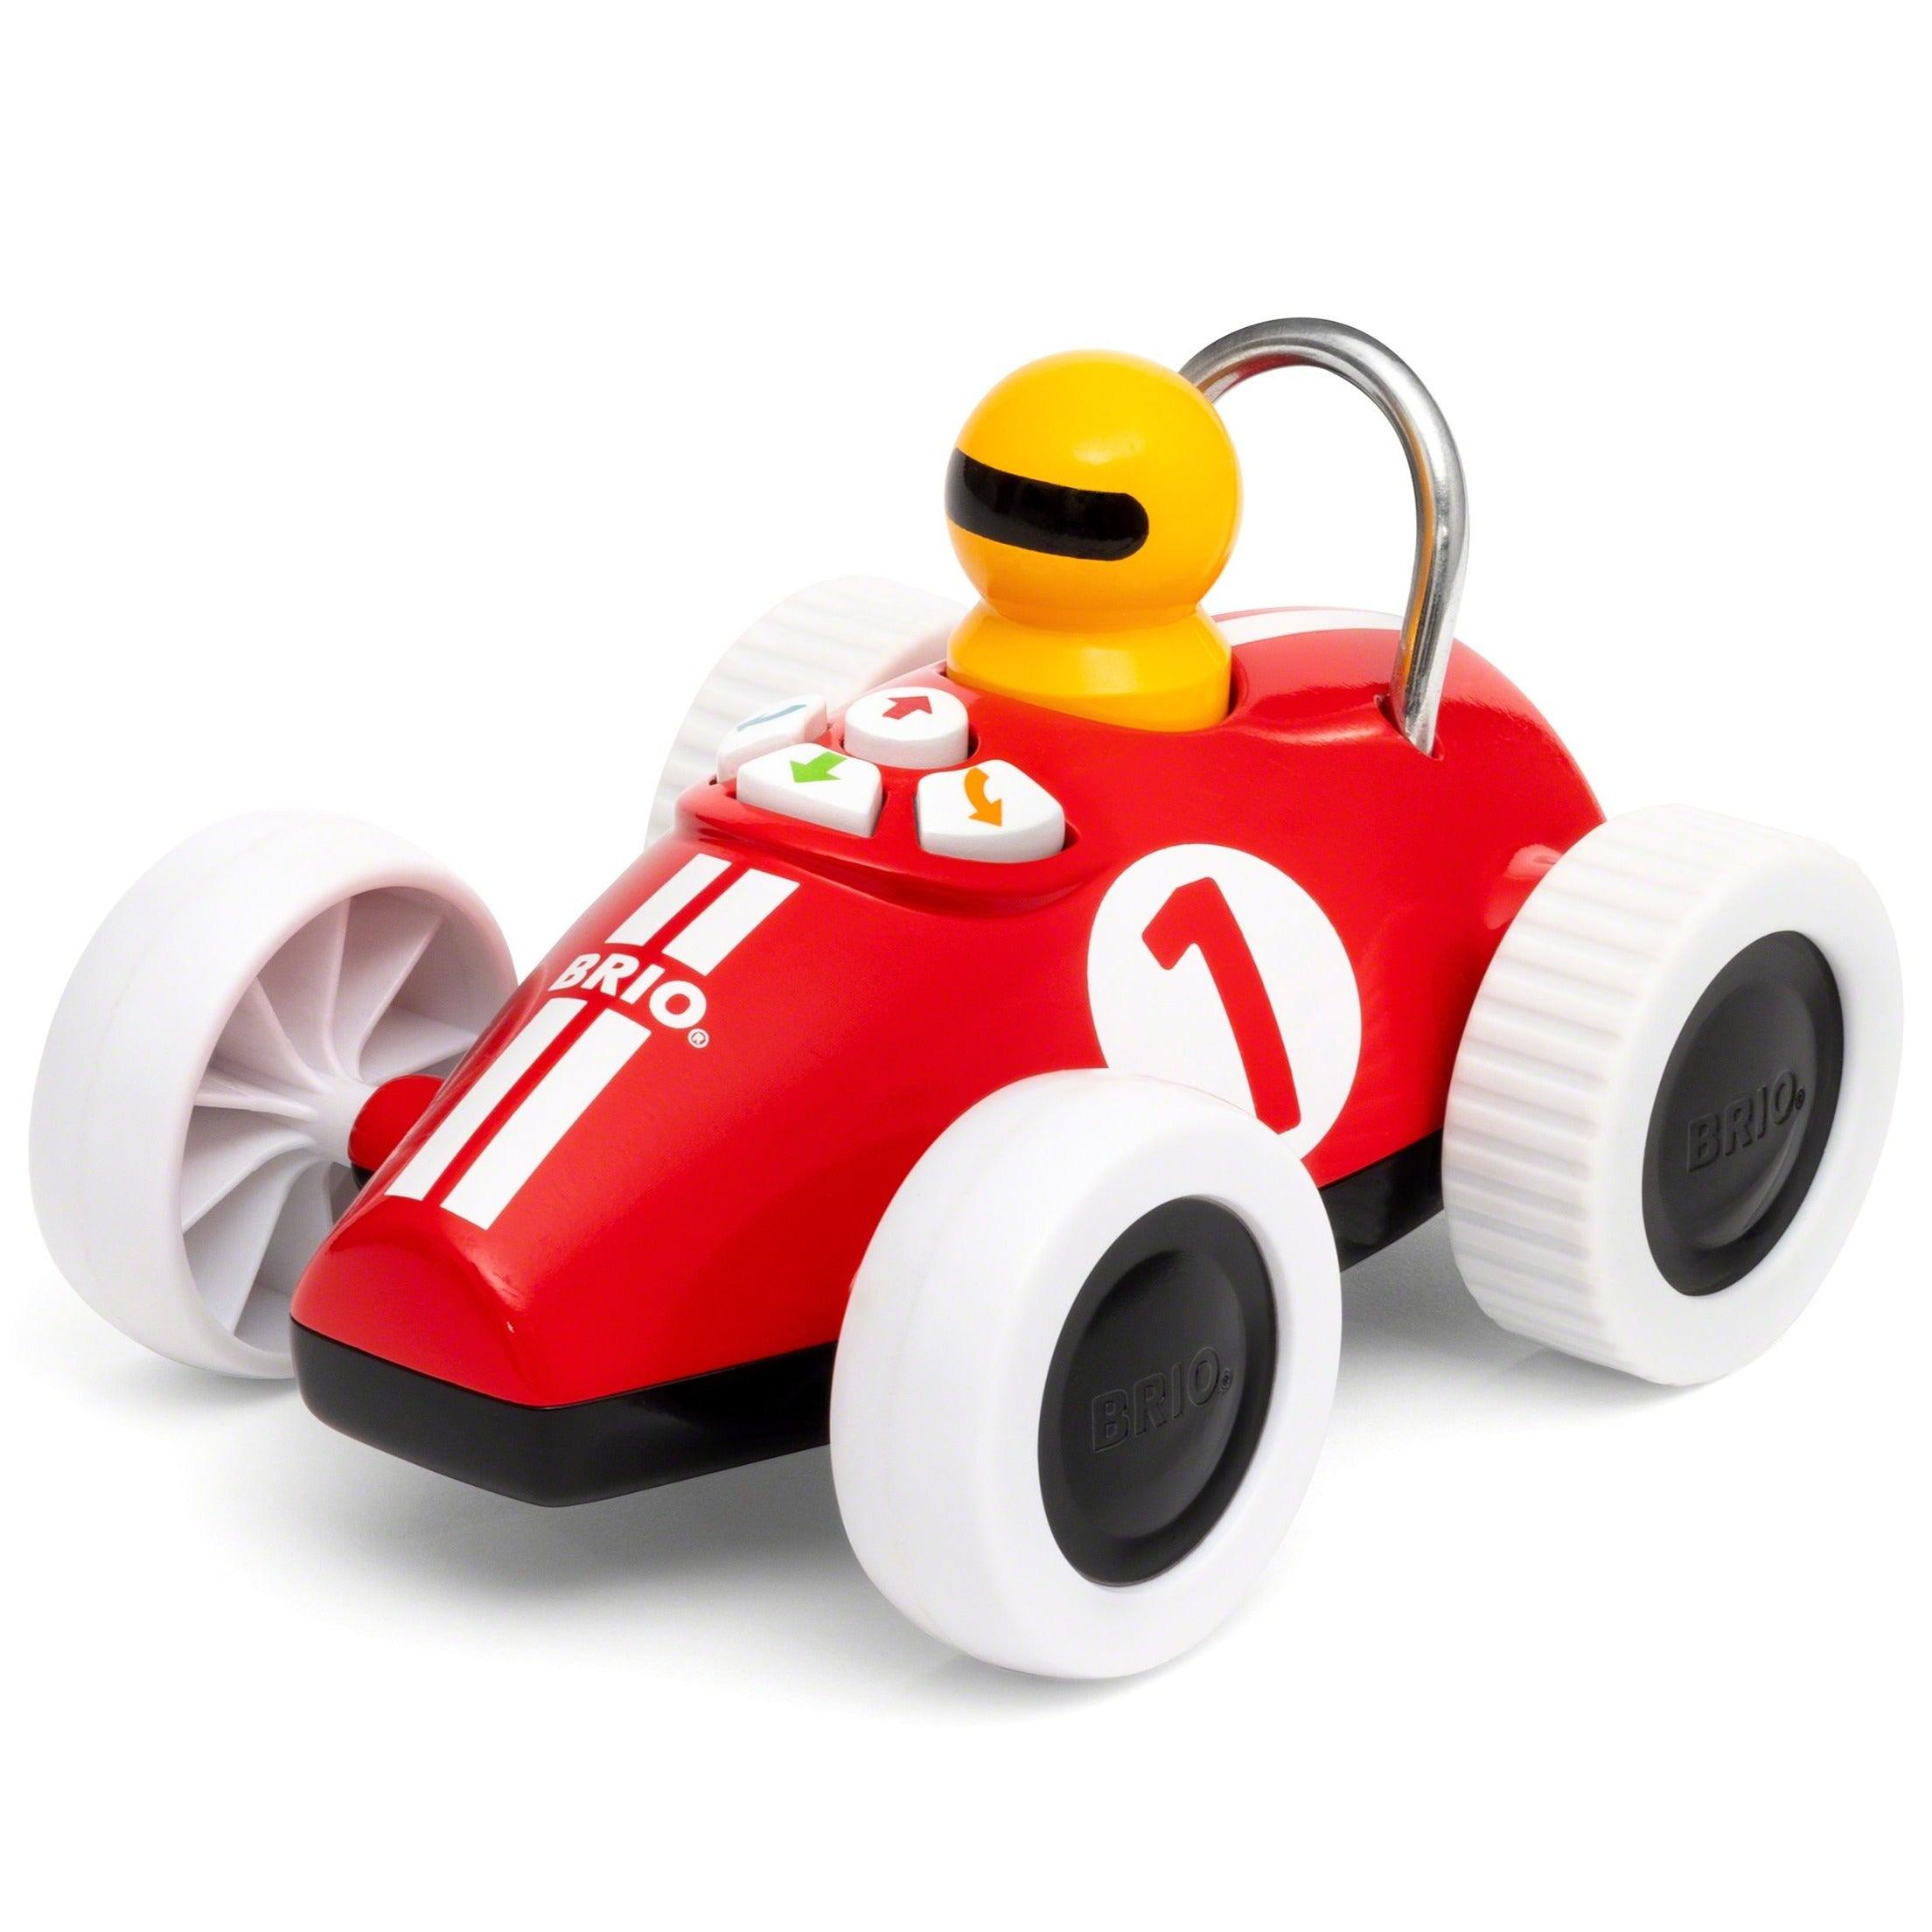 BRIO: samochód wyścigowy Play & Learn - Noski Noski